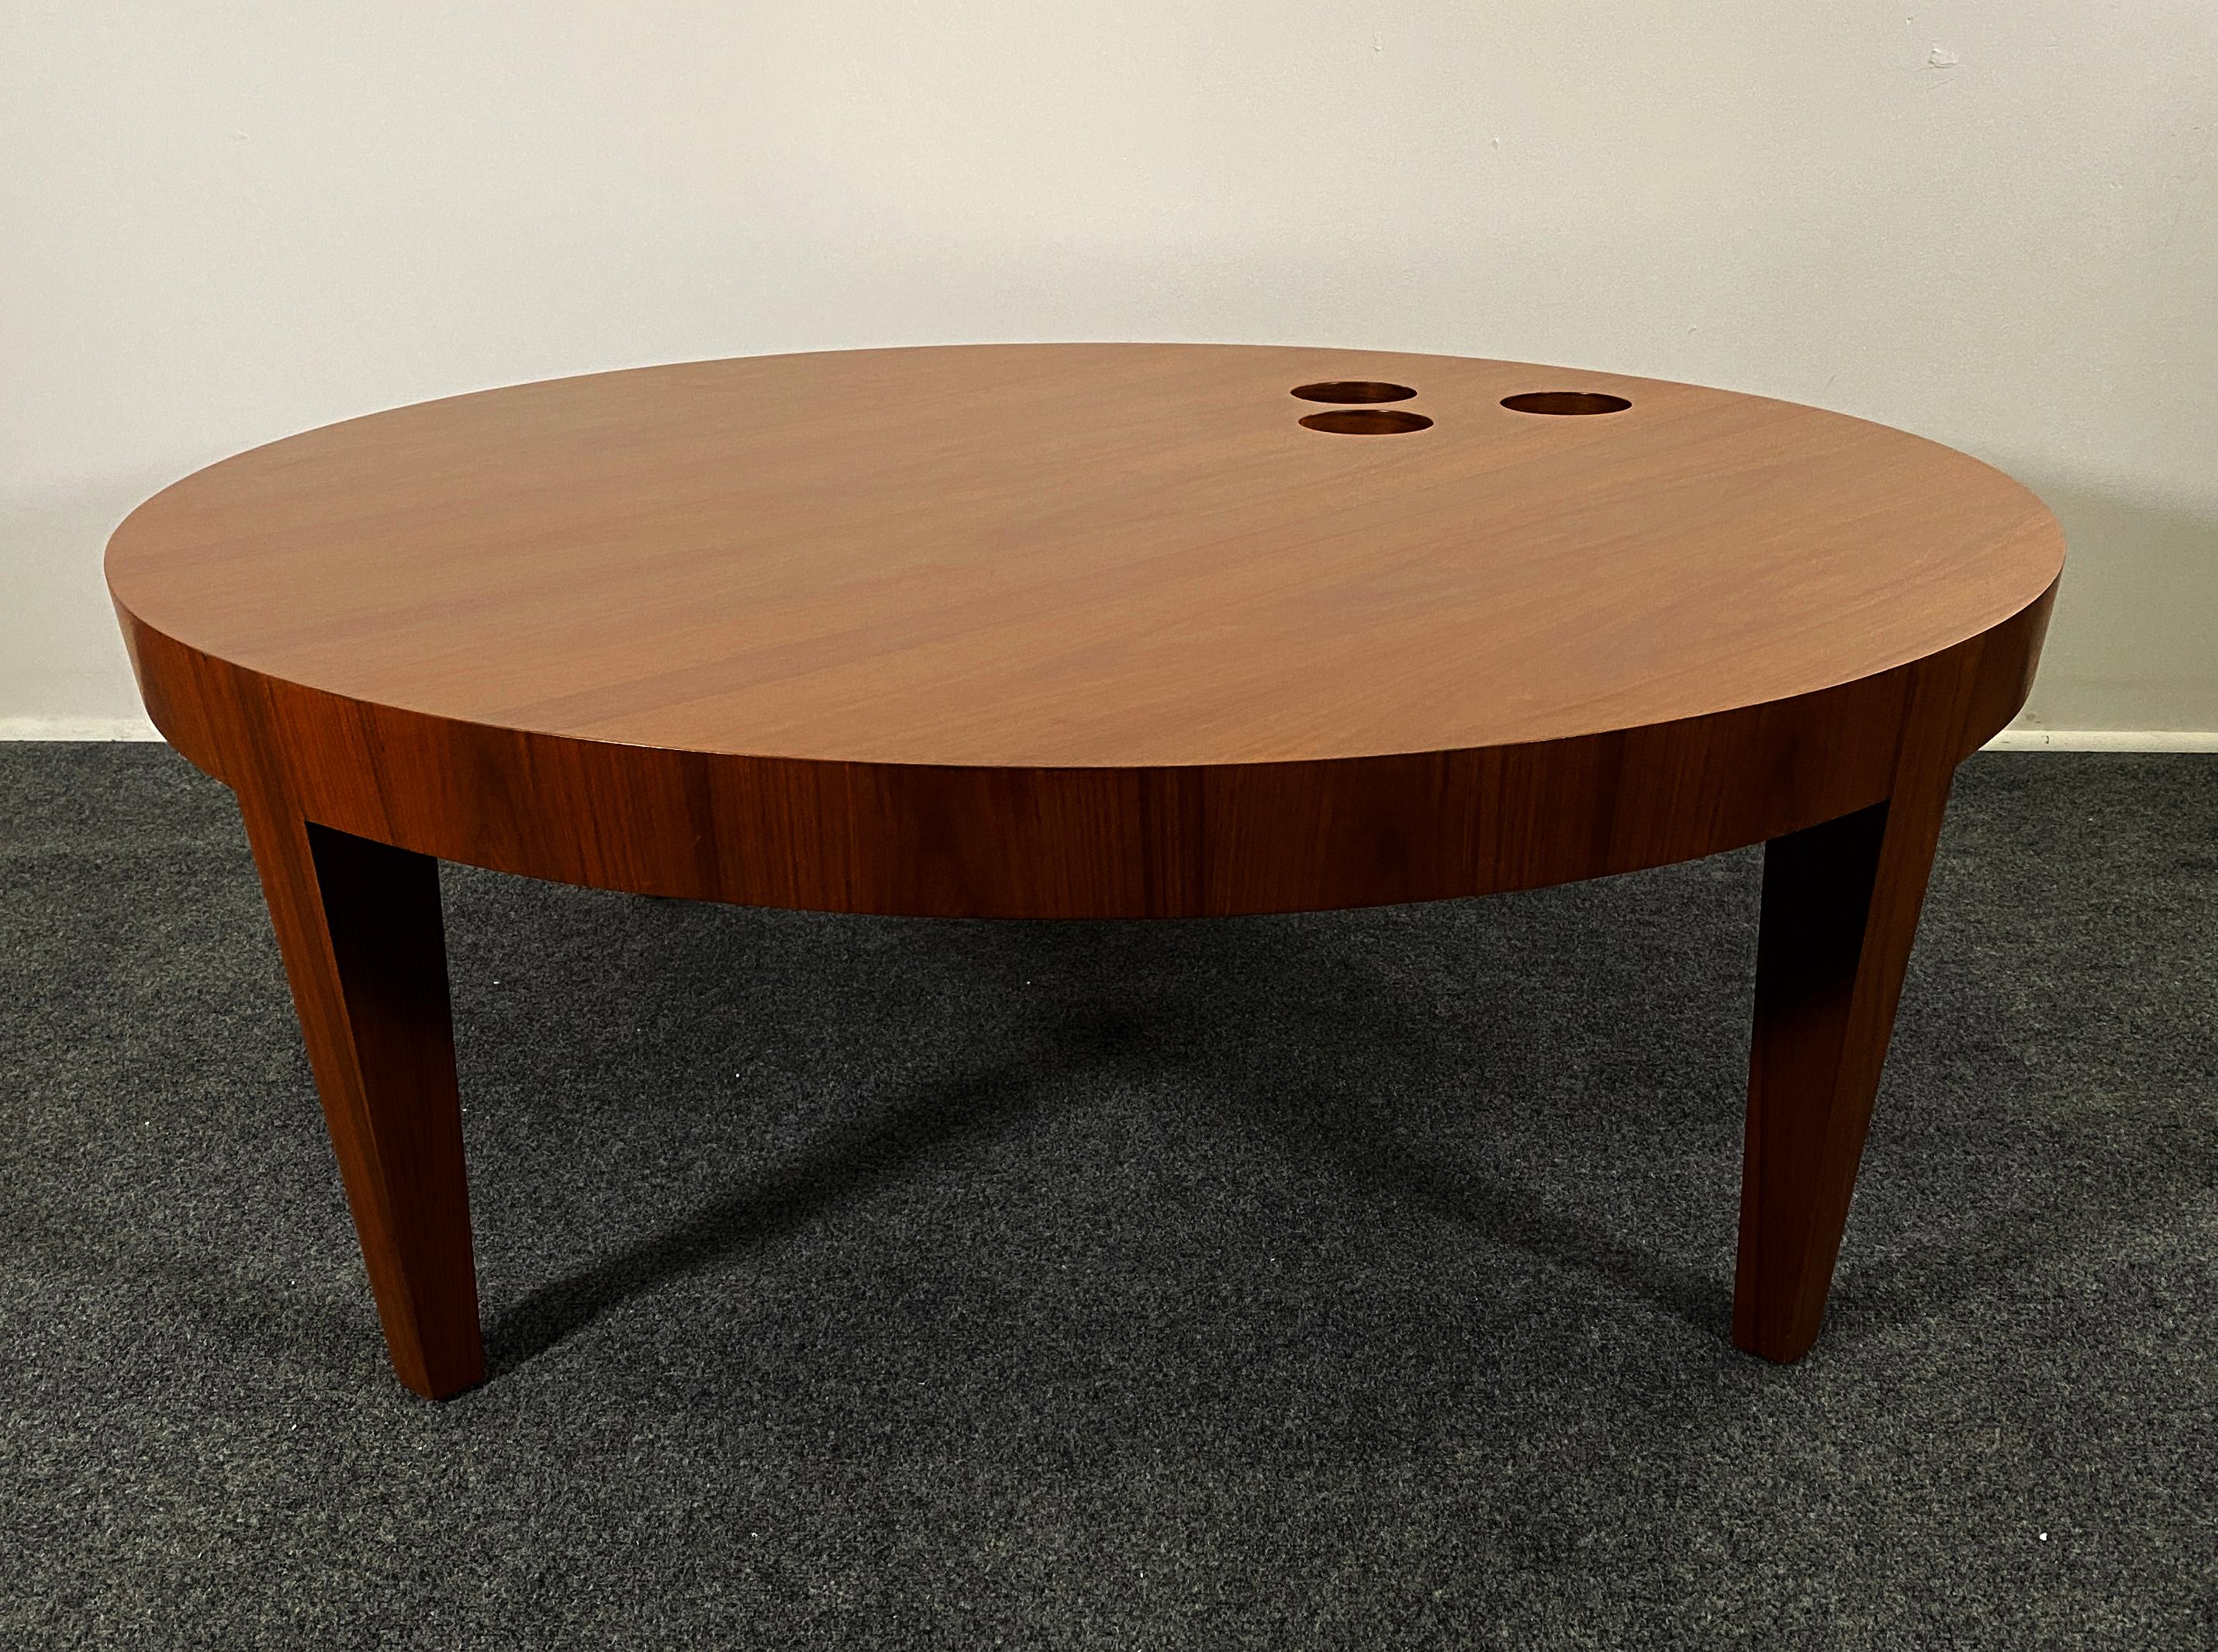 Colombian Artist designed bespoke furniture, unique walnut round coffee table with round cutouts, Antonio Fortuna.